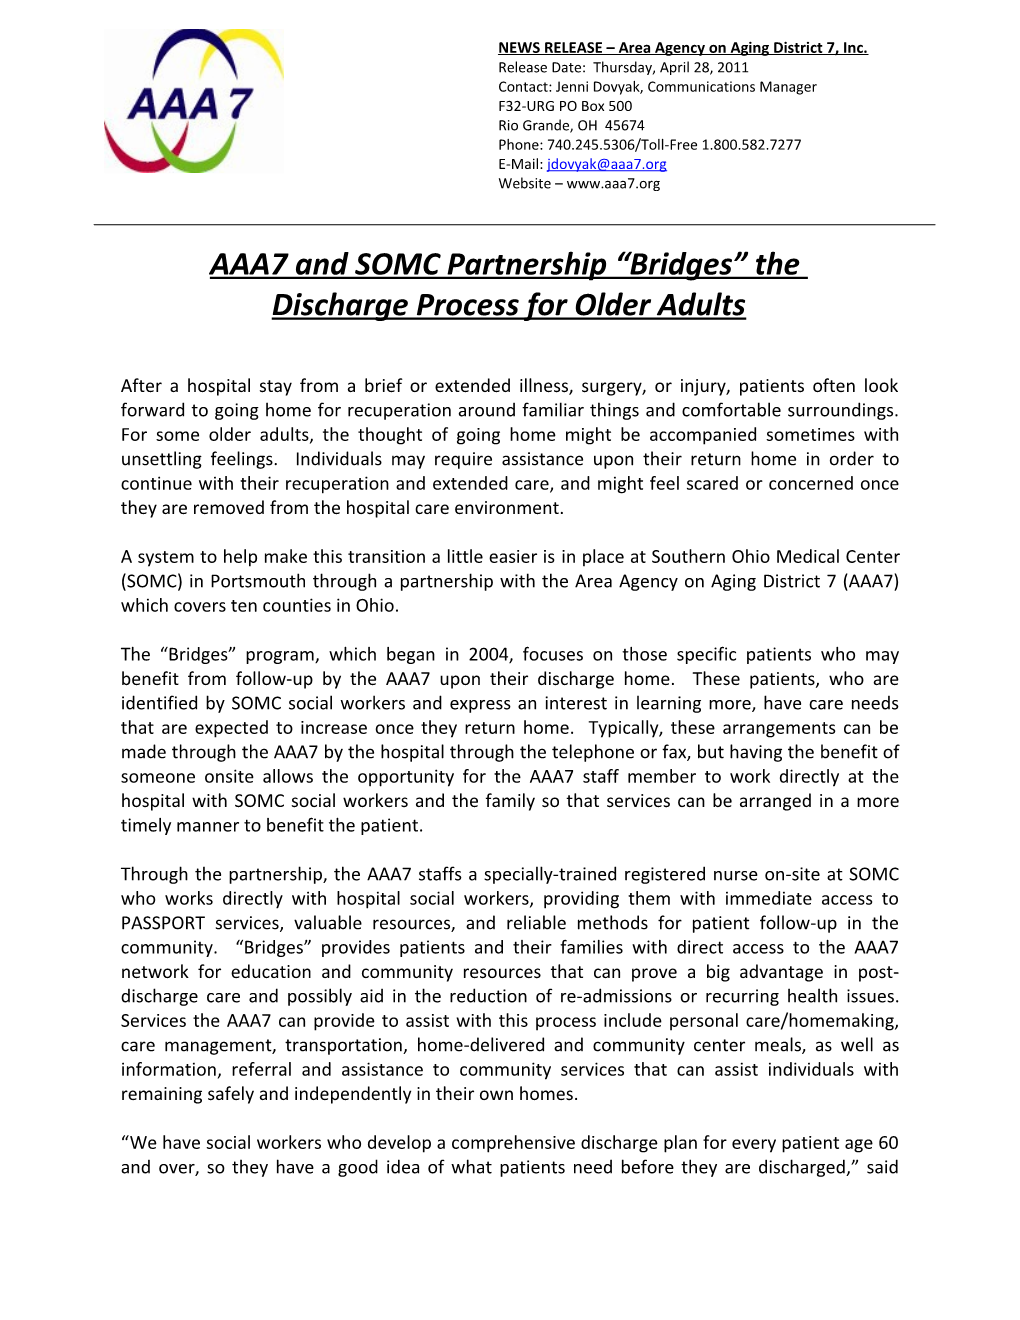 AAA7 and SOMC Partnership Bridges The